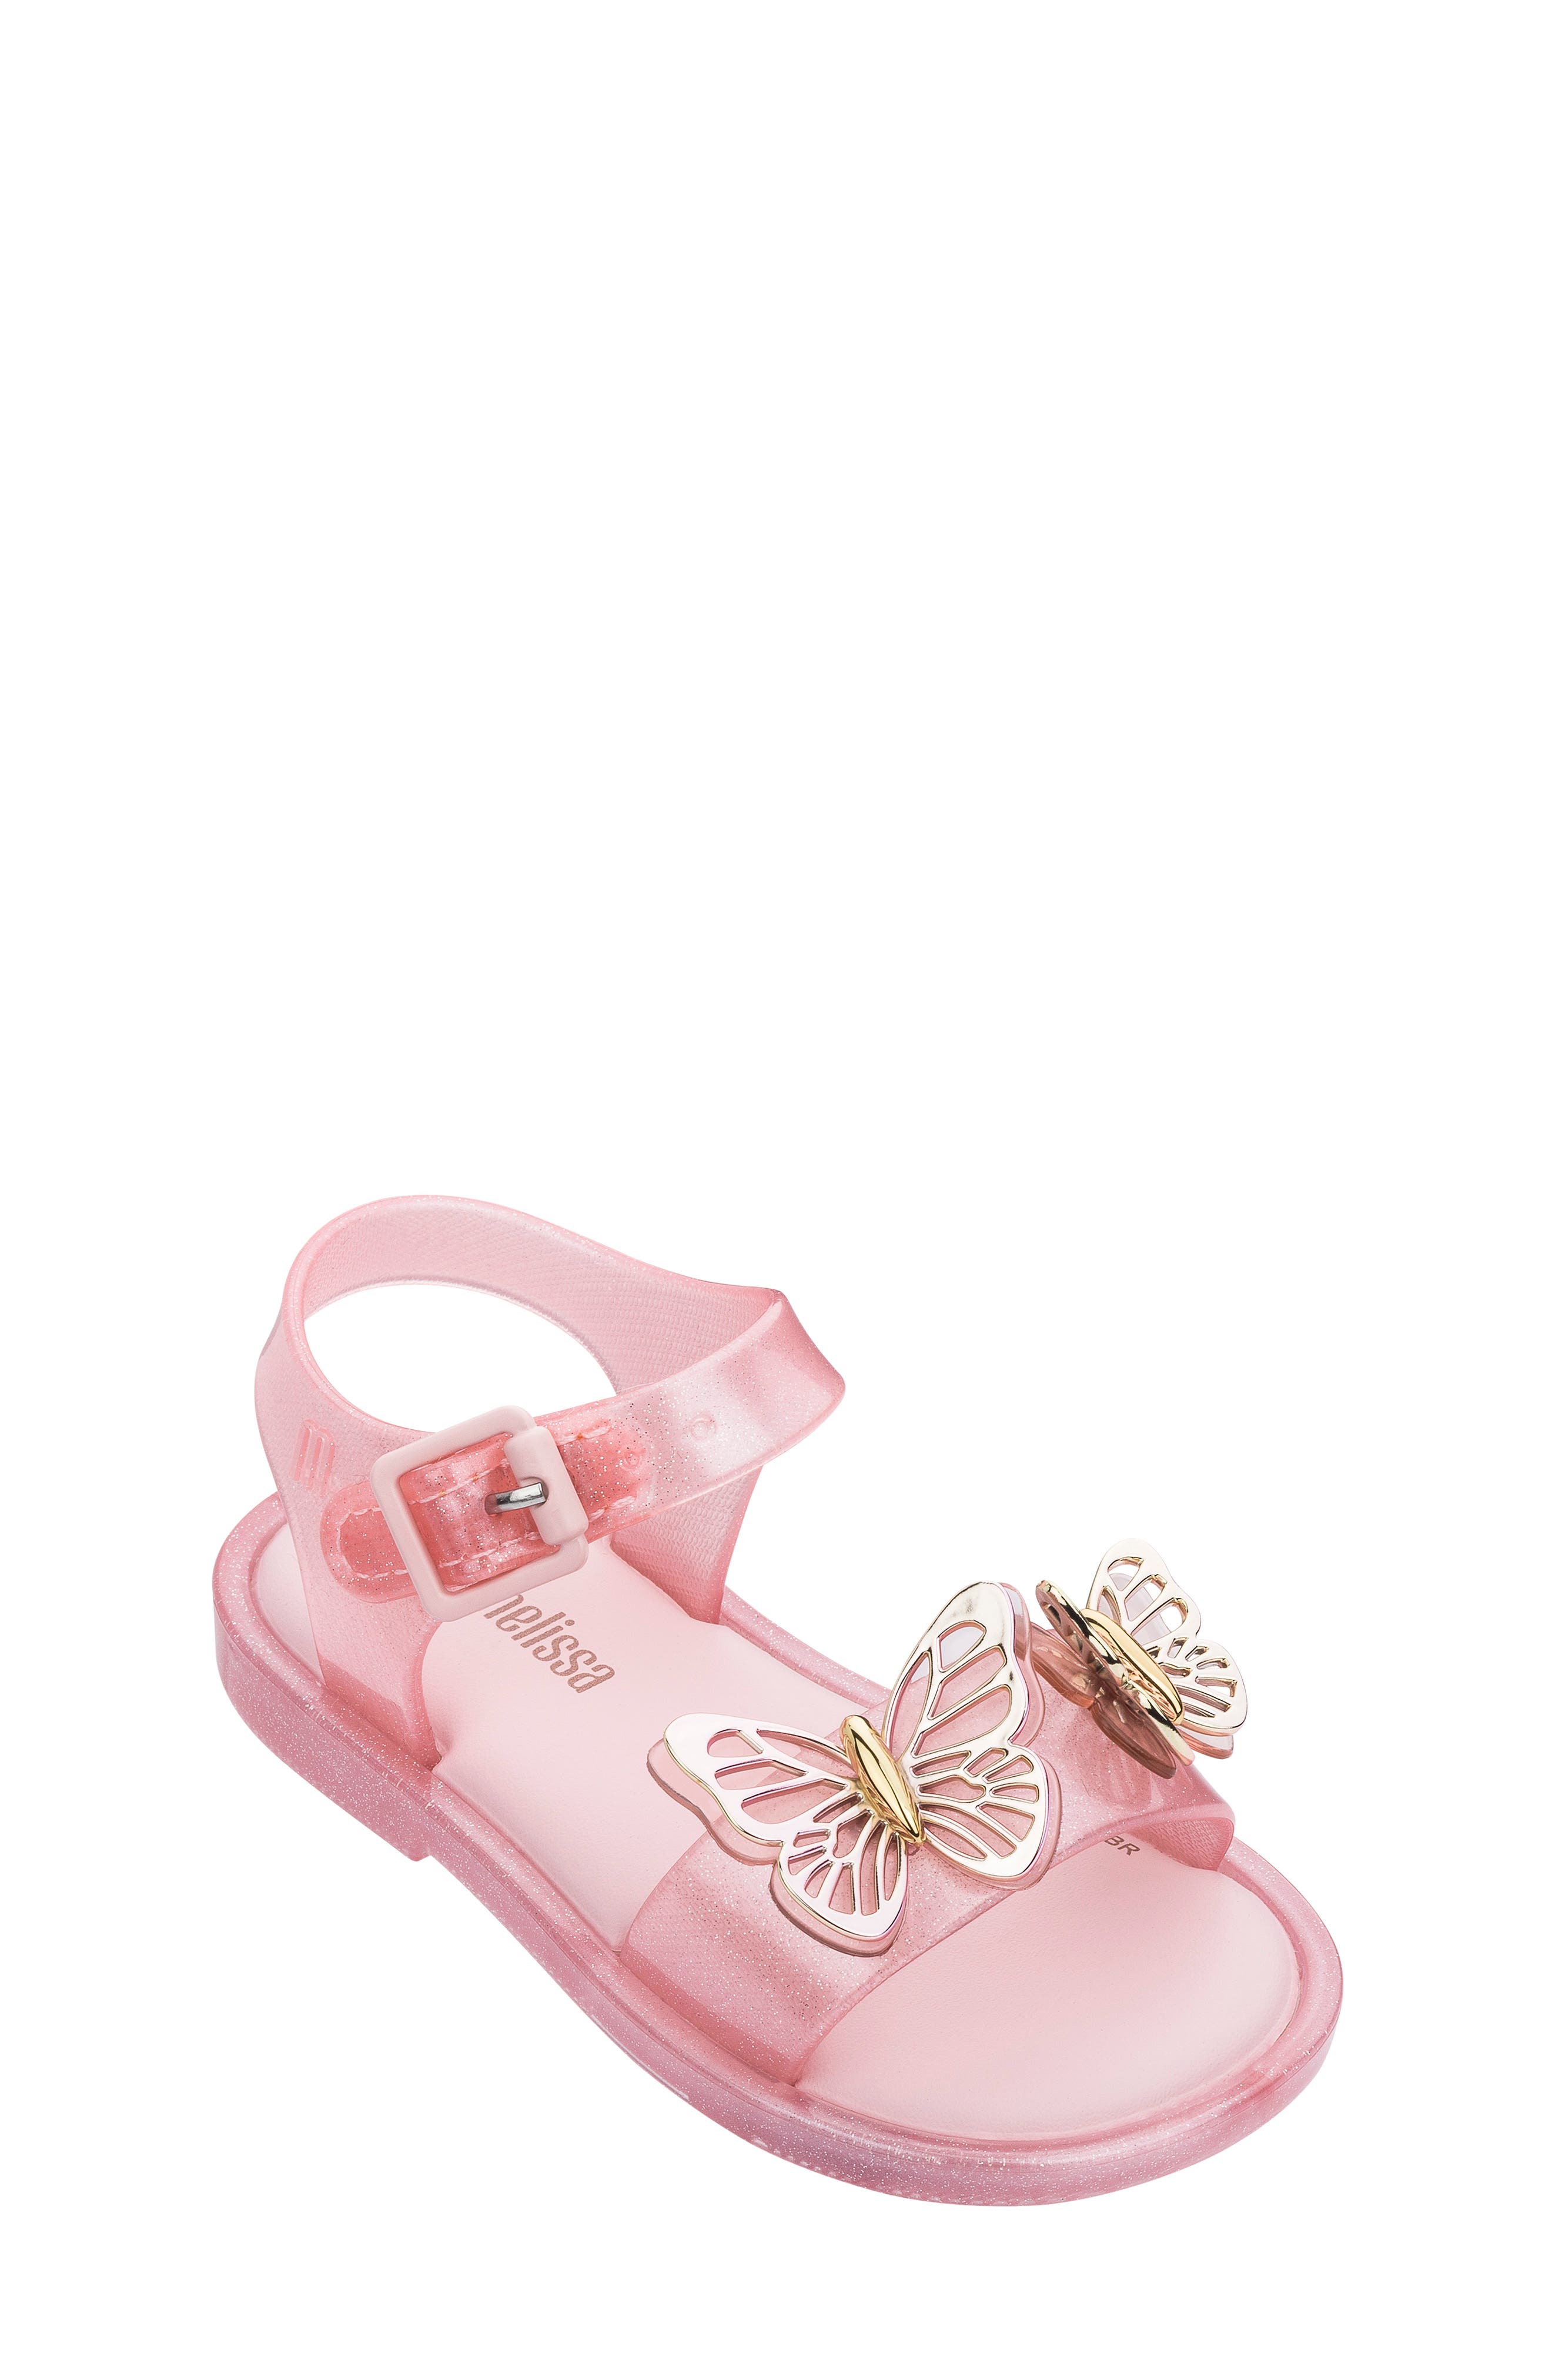 mini melissa little girl shoes